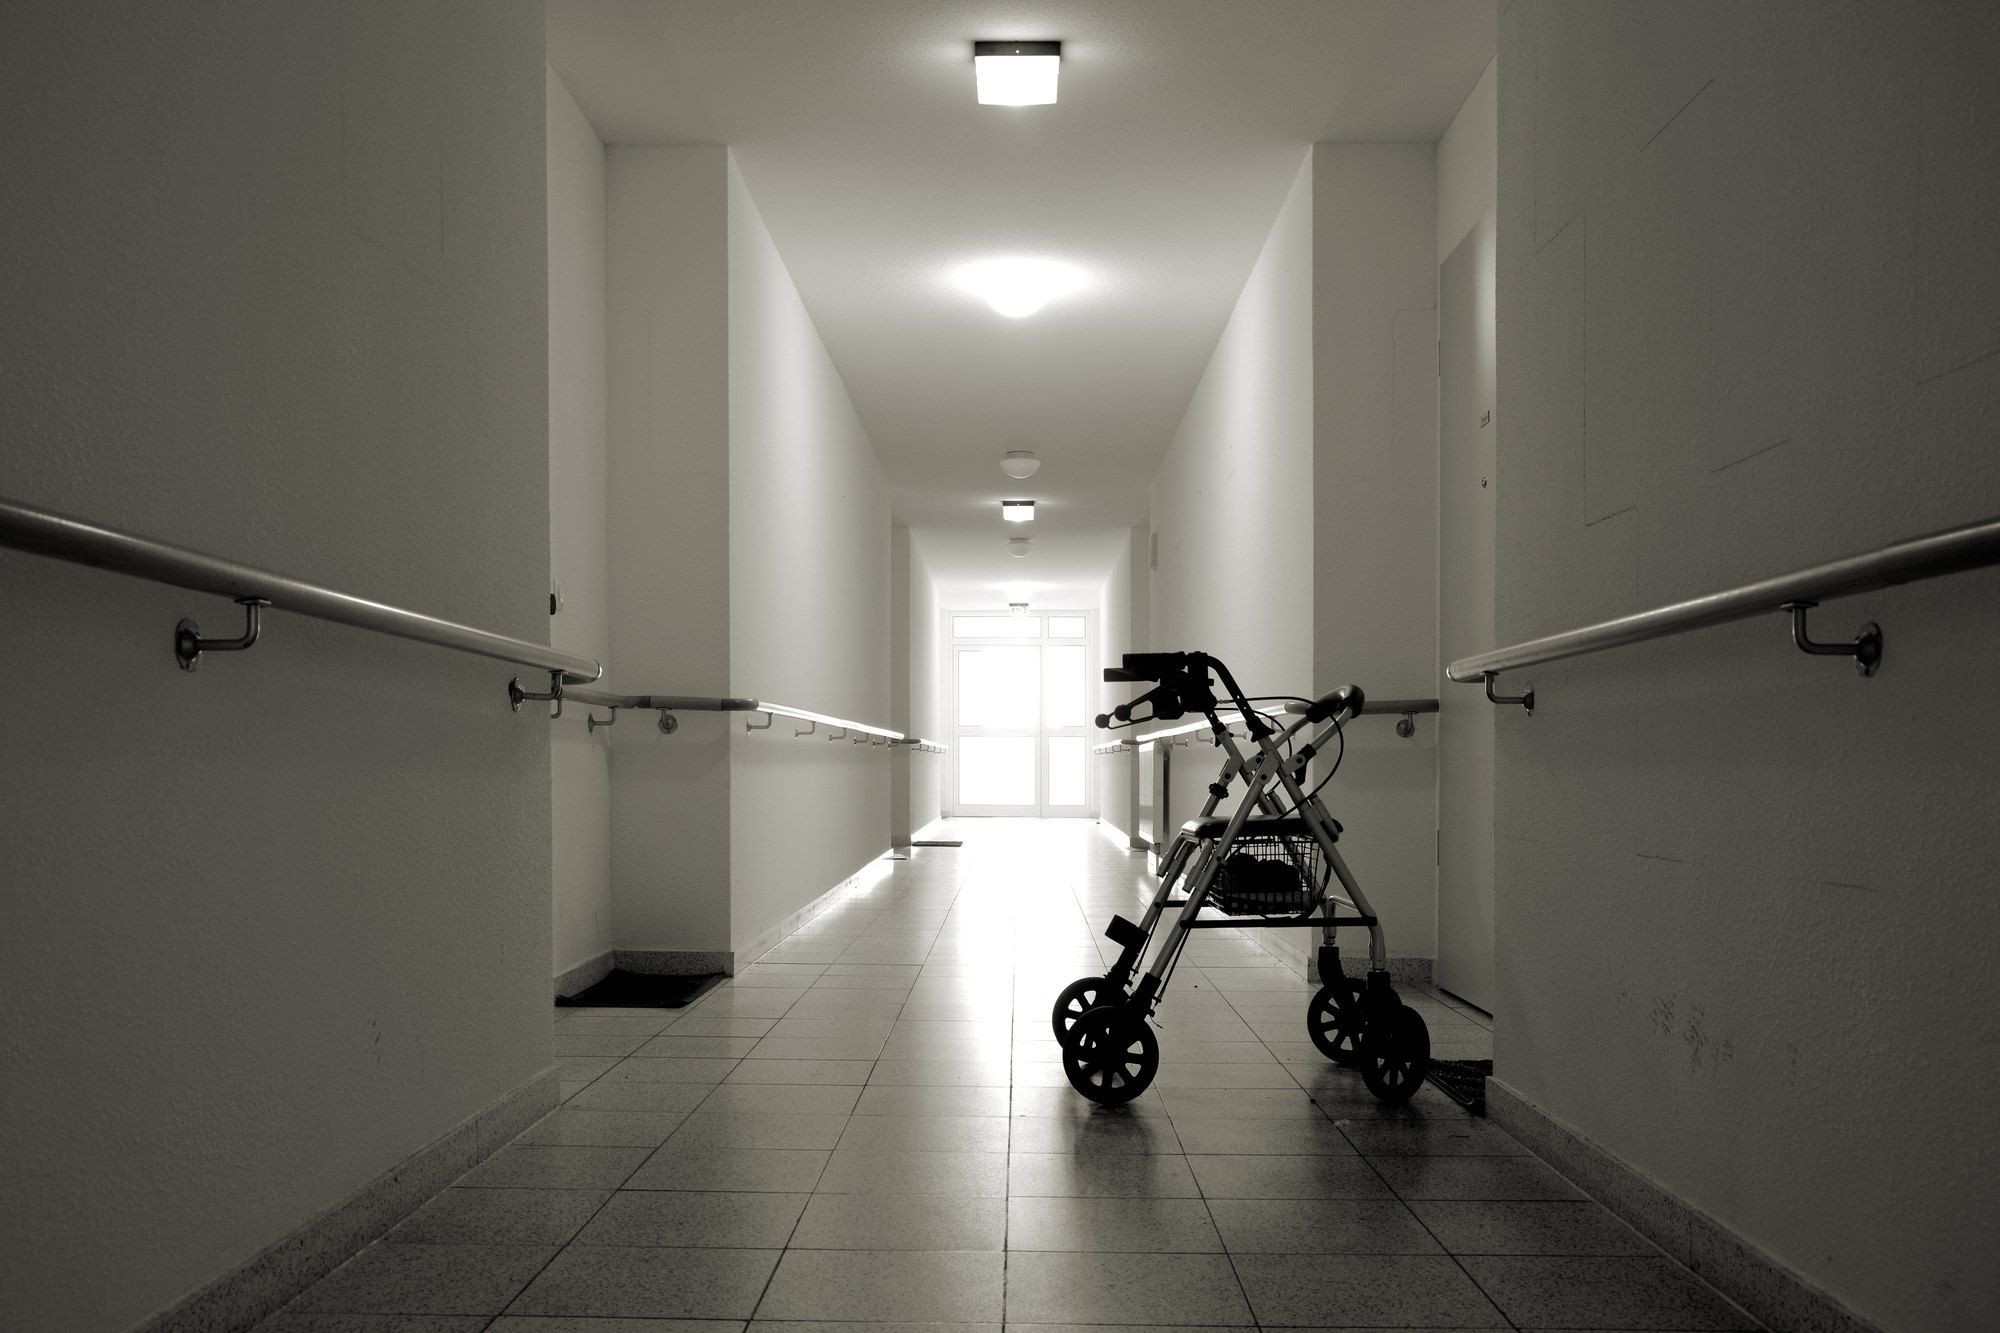 A Nursing home corridor regarding the Woodbridge Vista Care Community class action lawsuit filed against the long-term care home operators